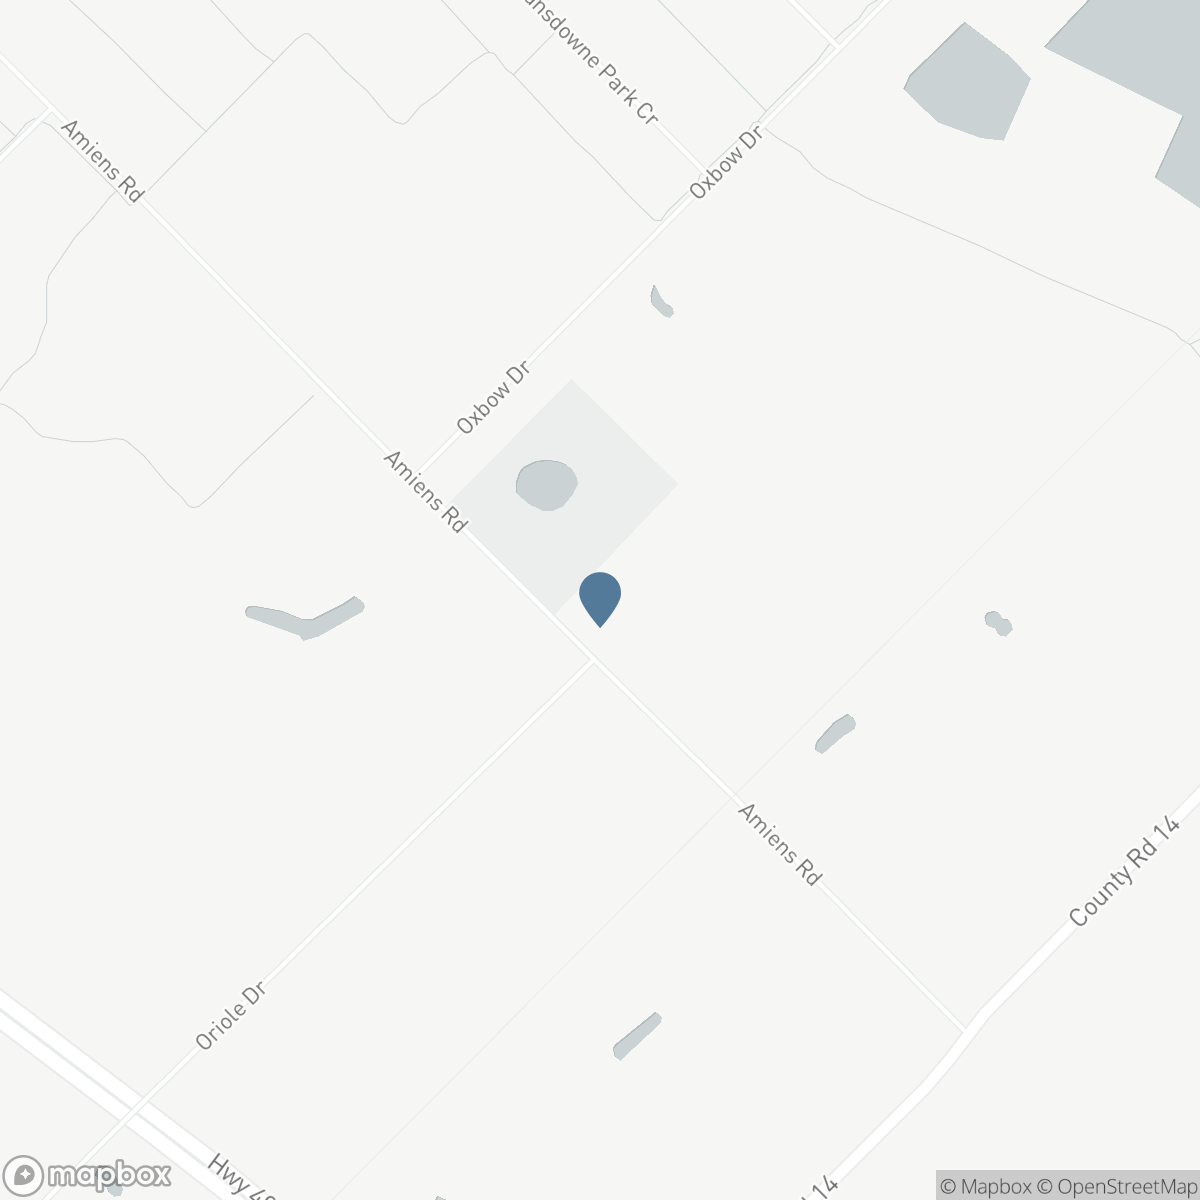 22790 AMIENS Road Unit# 51, Komoka, Ontario N0L 1R0